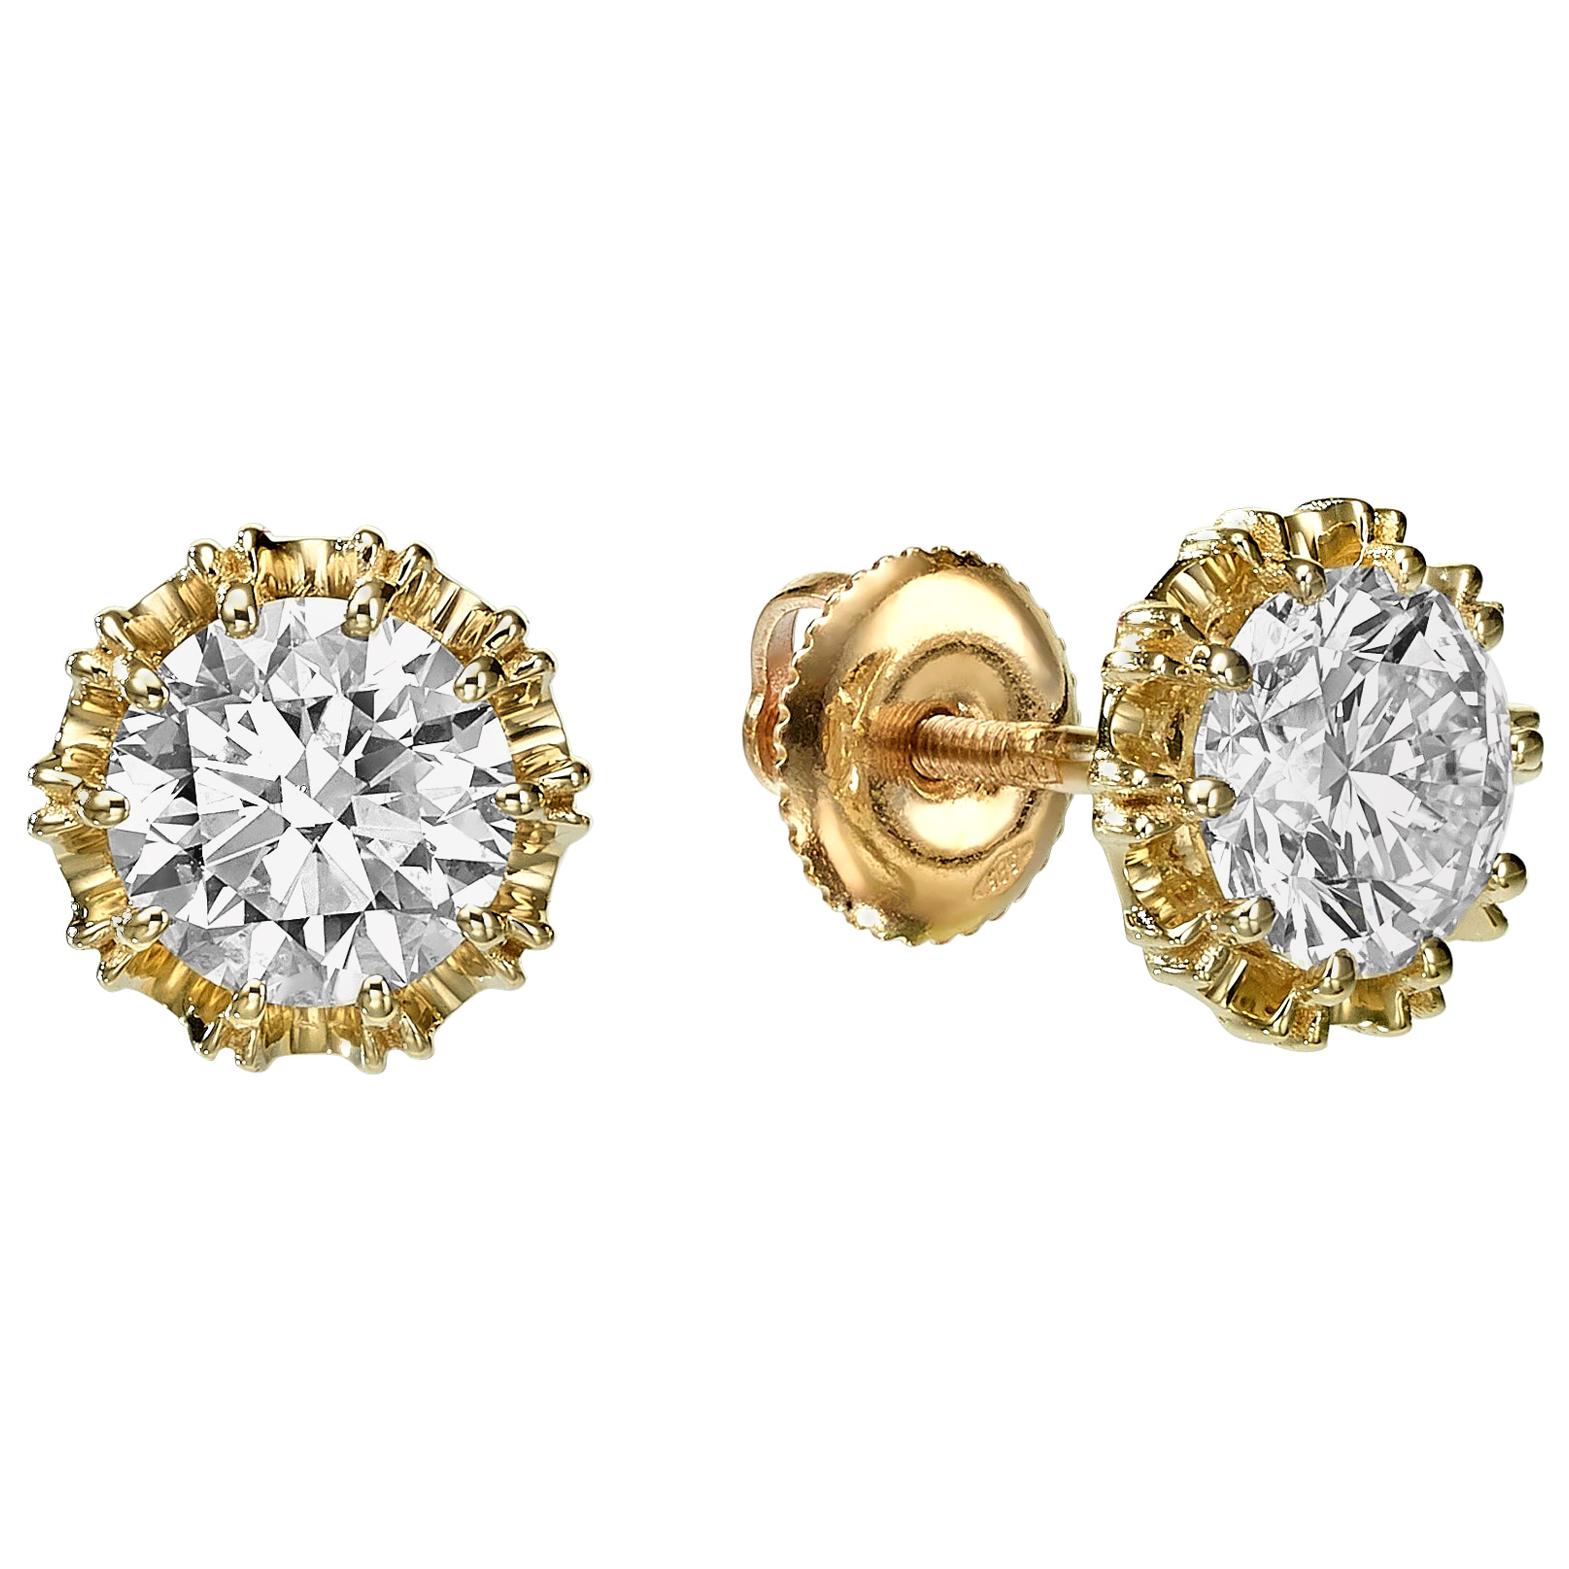 GIA Certified 2.04 Carat Diamond Stud Earrings with 18K Yellow Gold